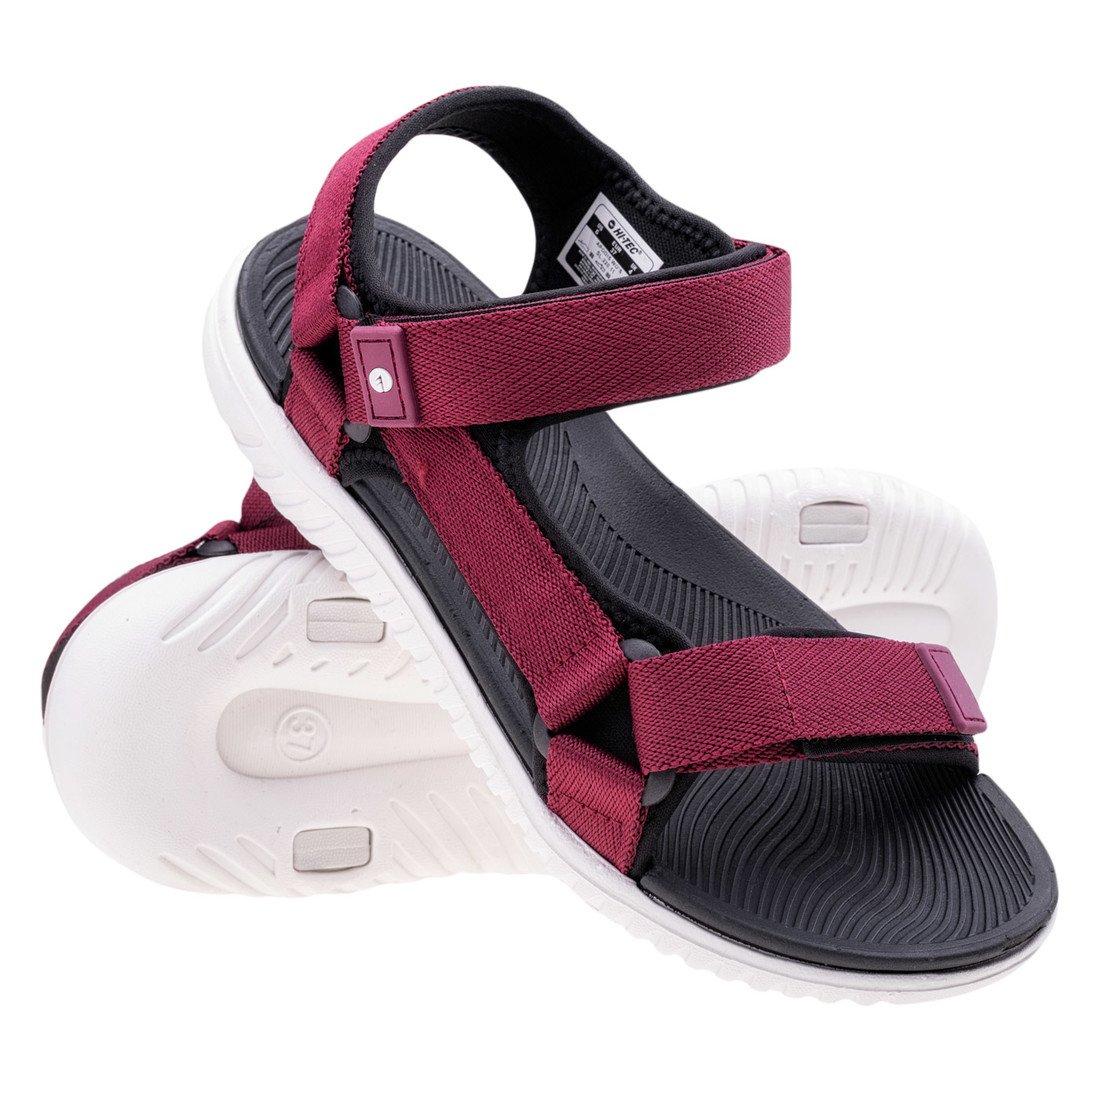 HI-TEC Apodis Wo's - dámské sandály (fialové) Velikost: 36